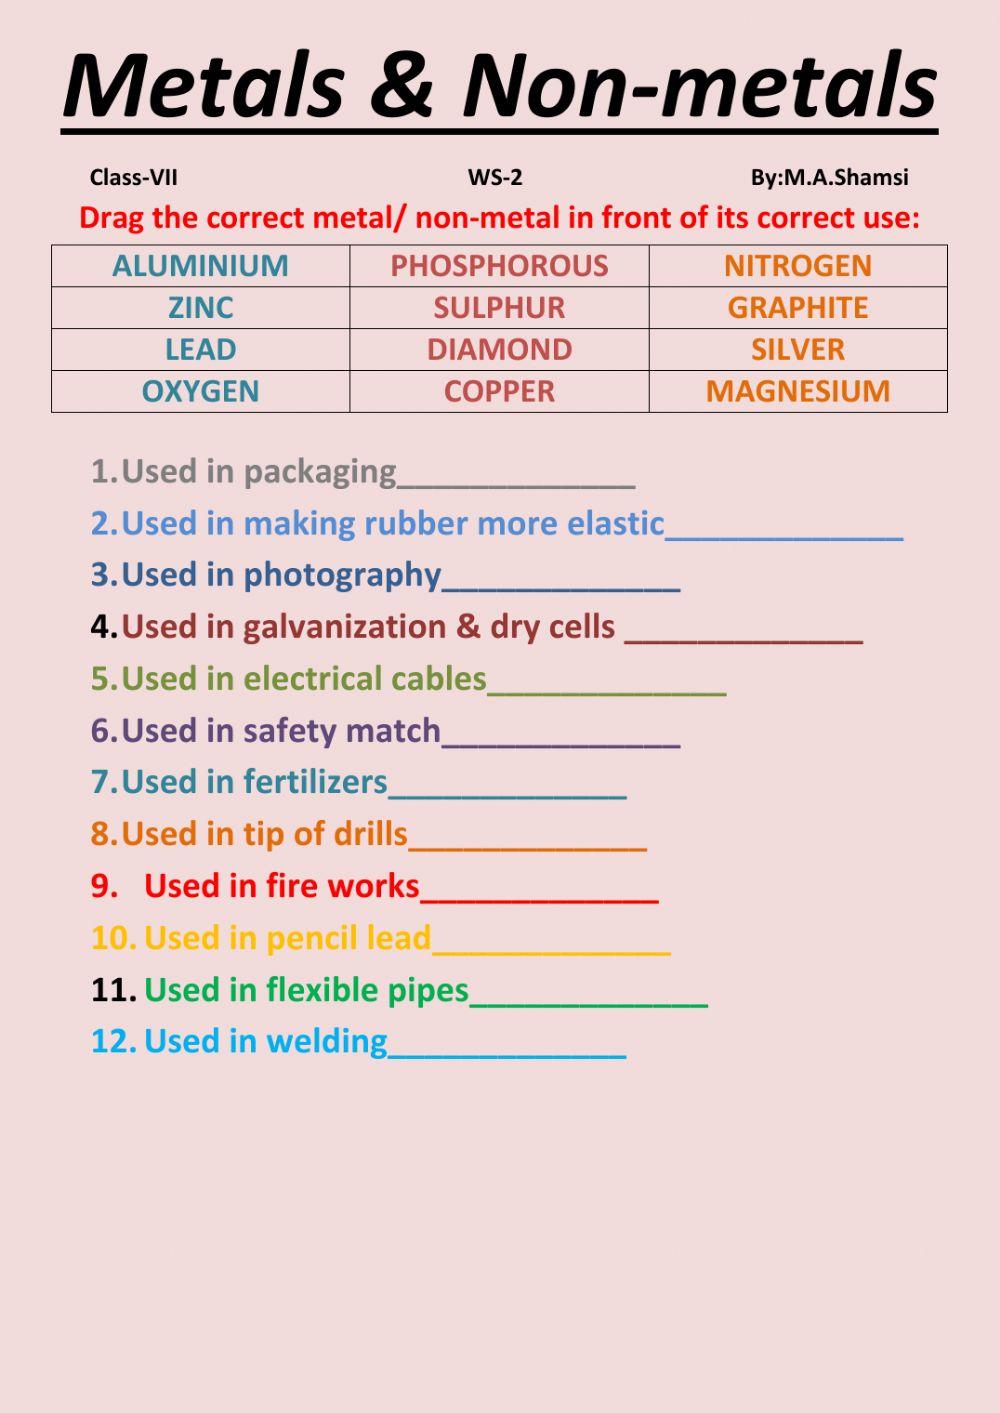 Uses of metals & non-metals